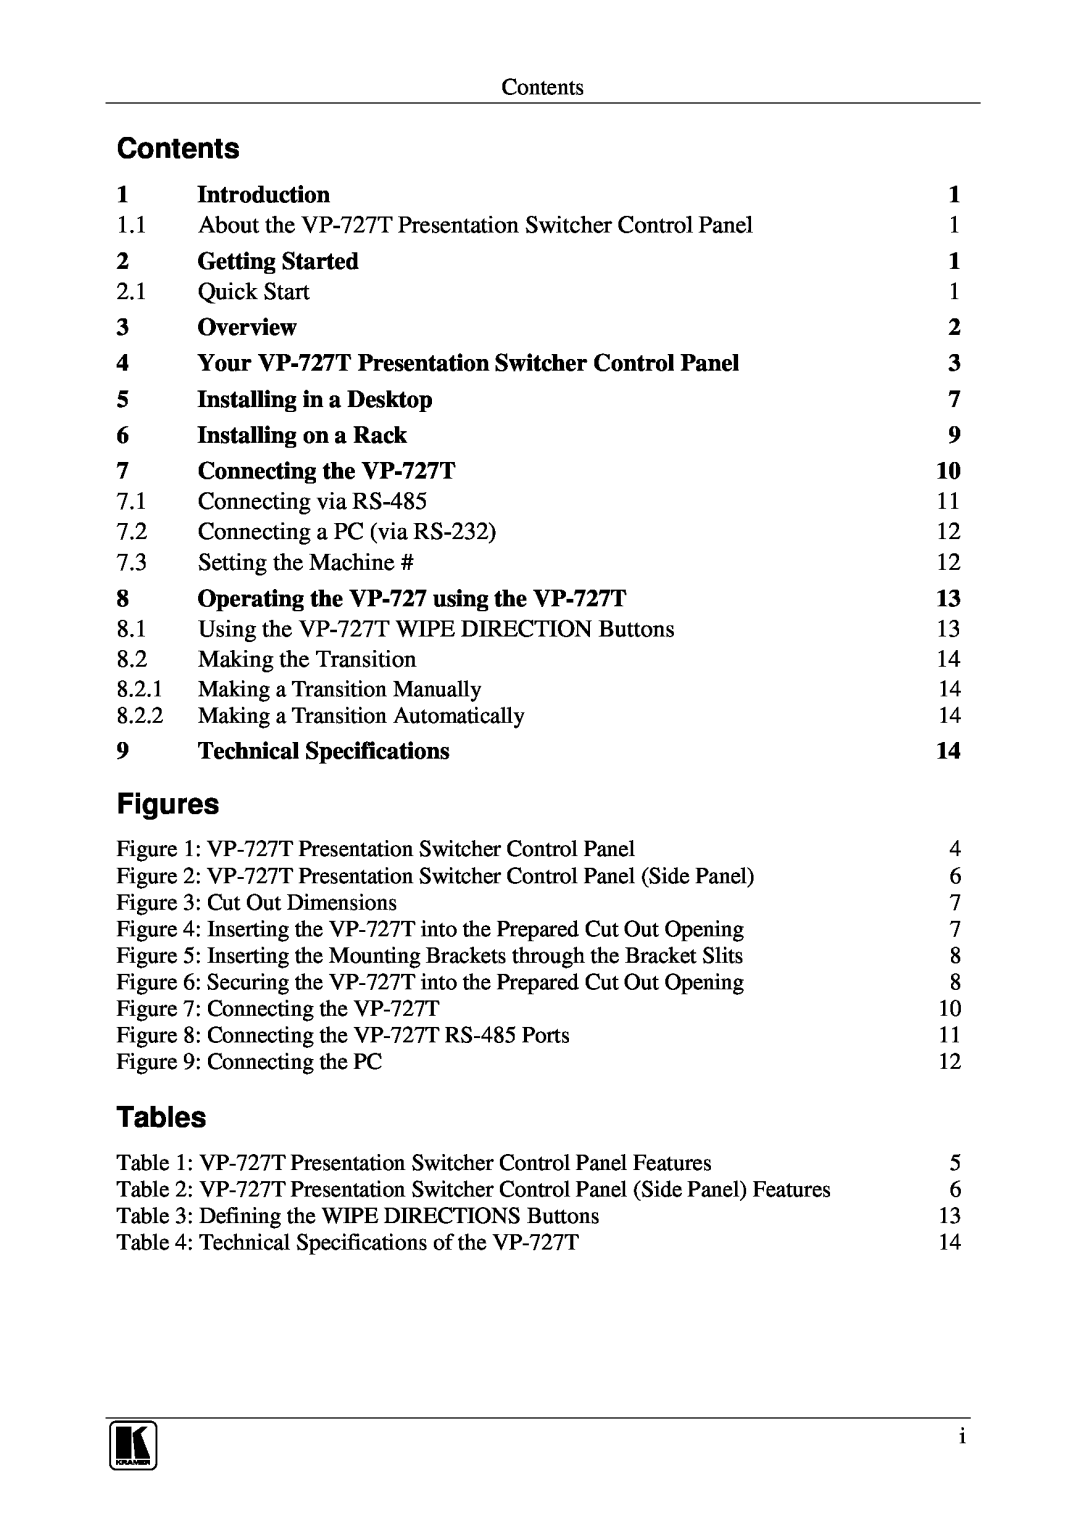 Kramer Electronics VP-727T user manual Contents, Figures, Tables 